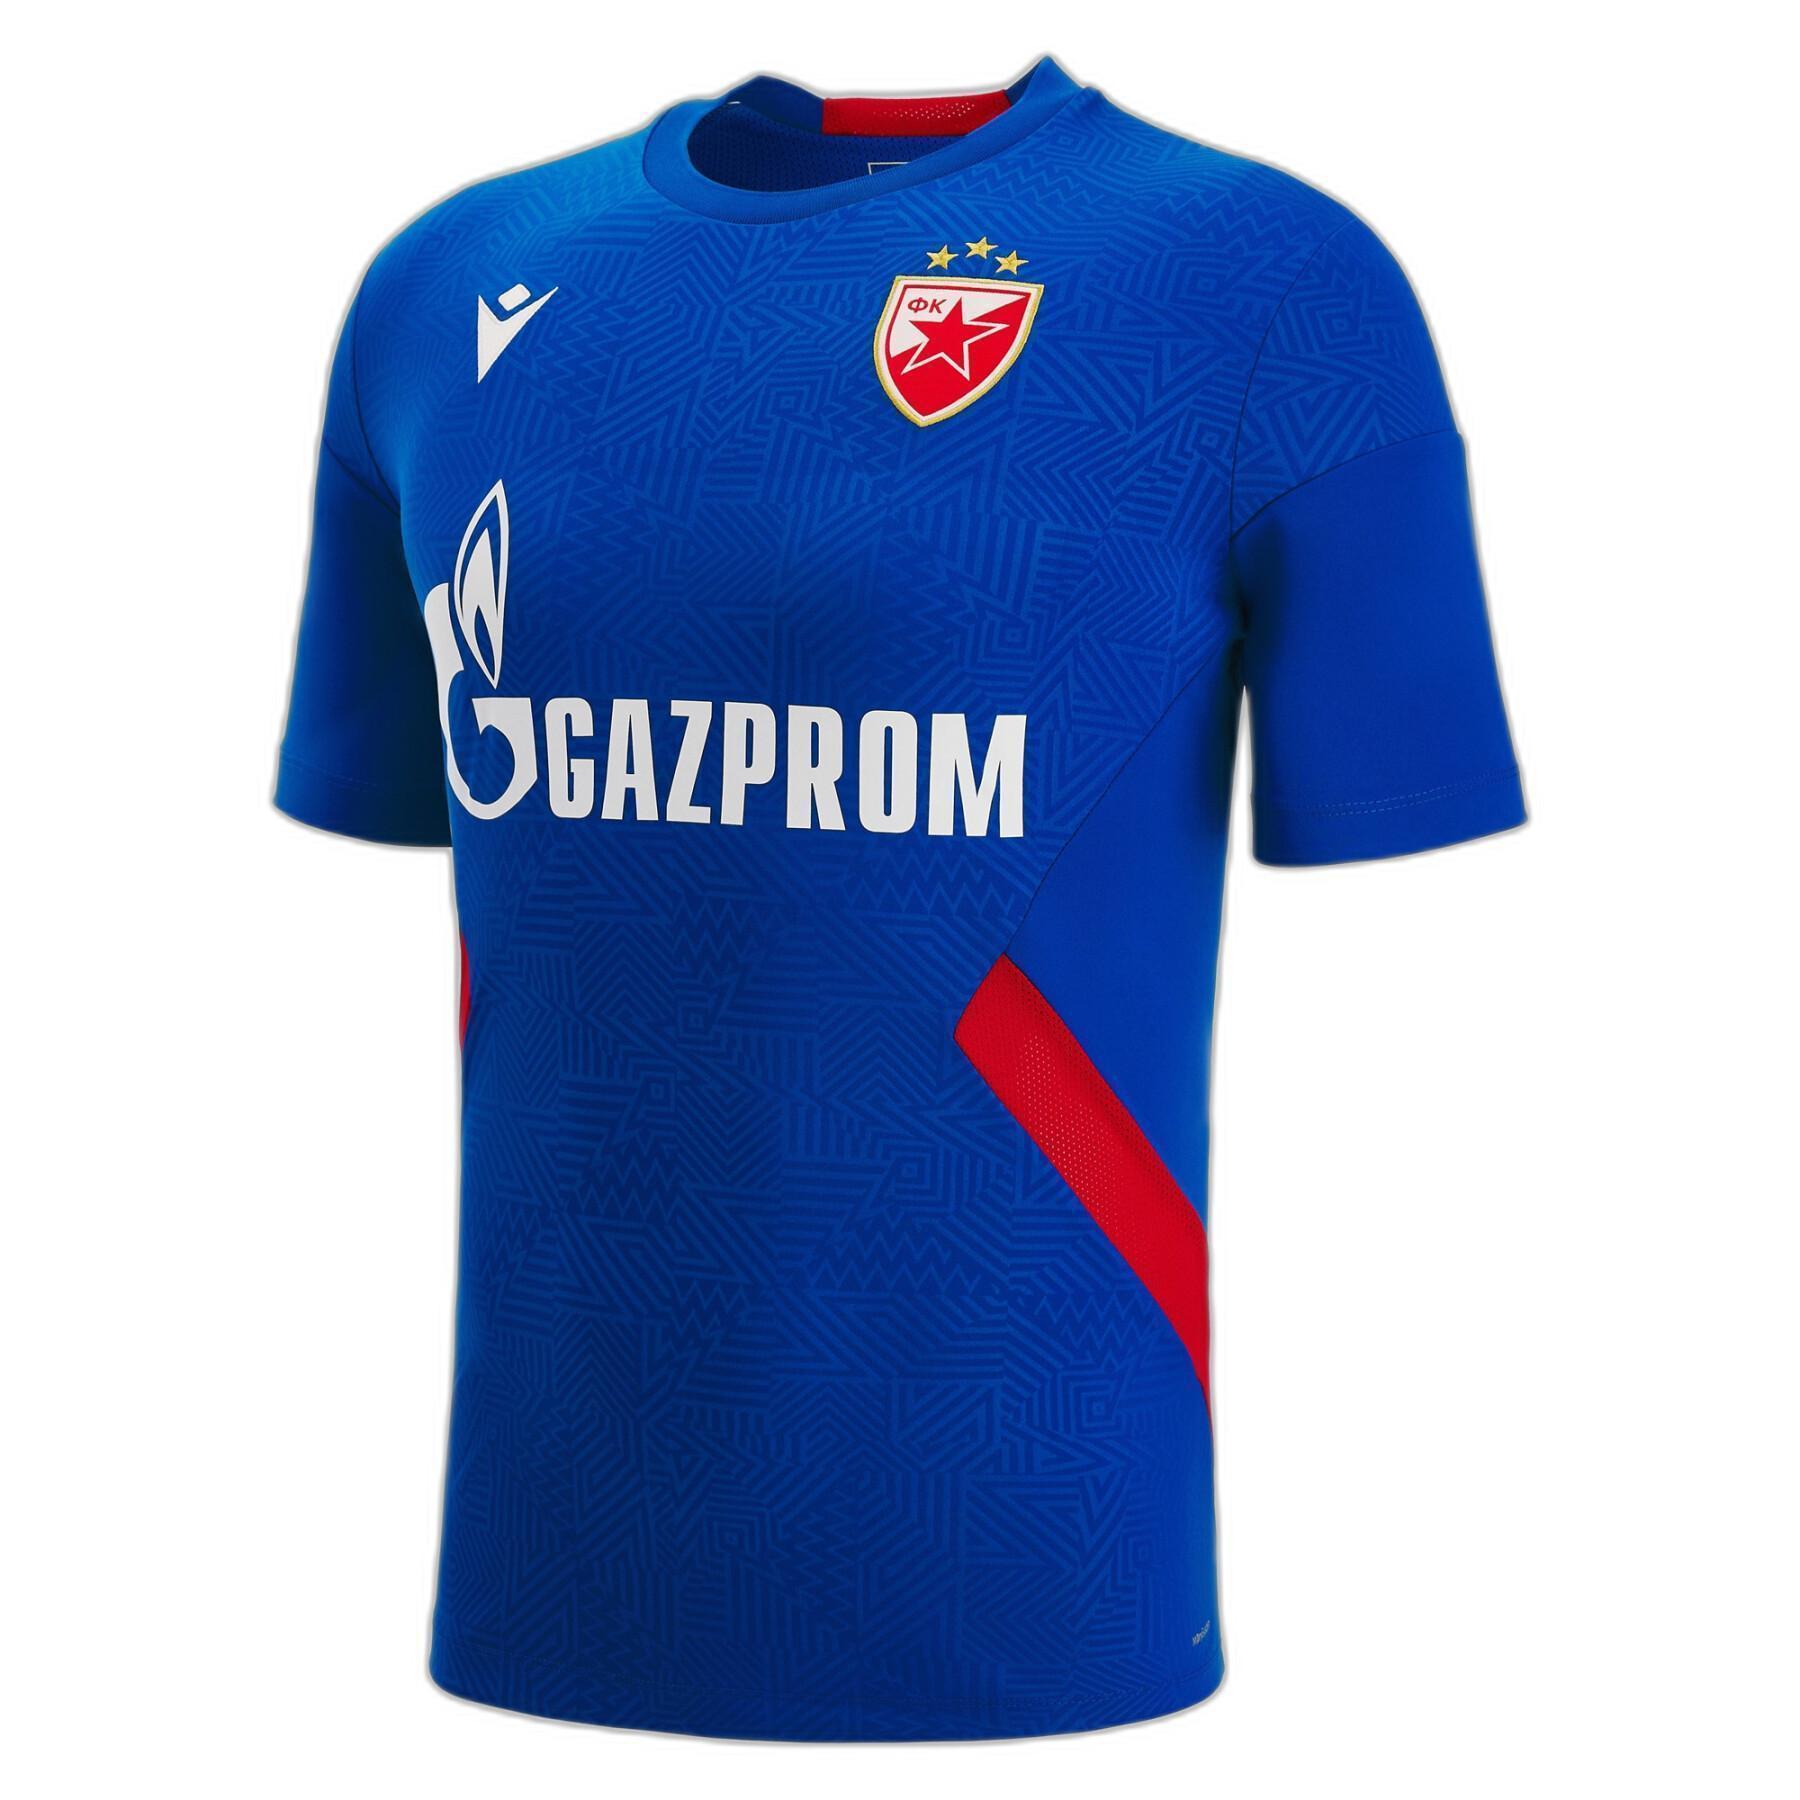 T-shirt Hajduk Split 2020/21 - Outros clubes - Outros clubes - Adeptos